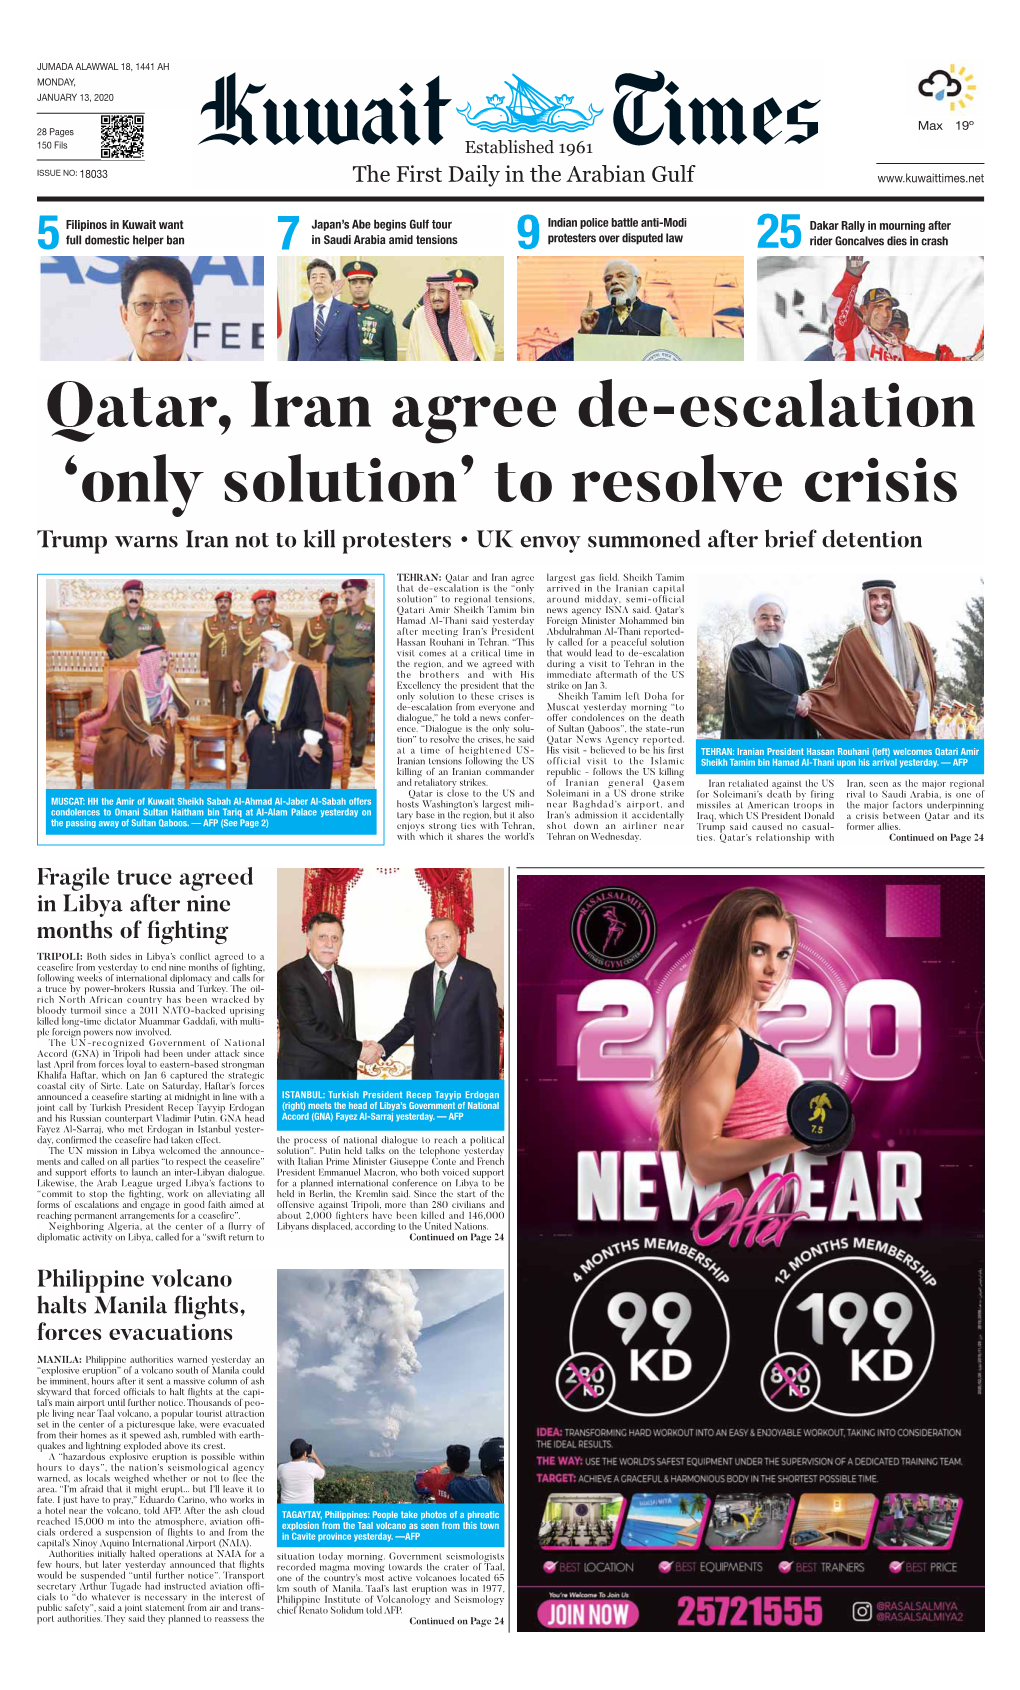 Qatar, Iran Agree De-Escalation 'Only Solution' to Resolve Crisis